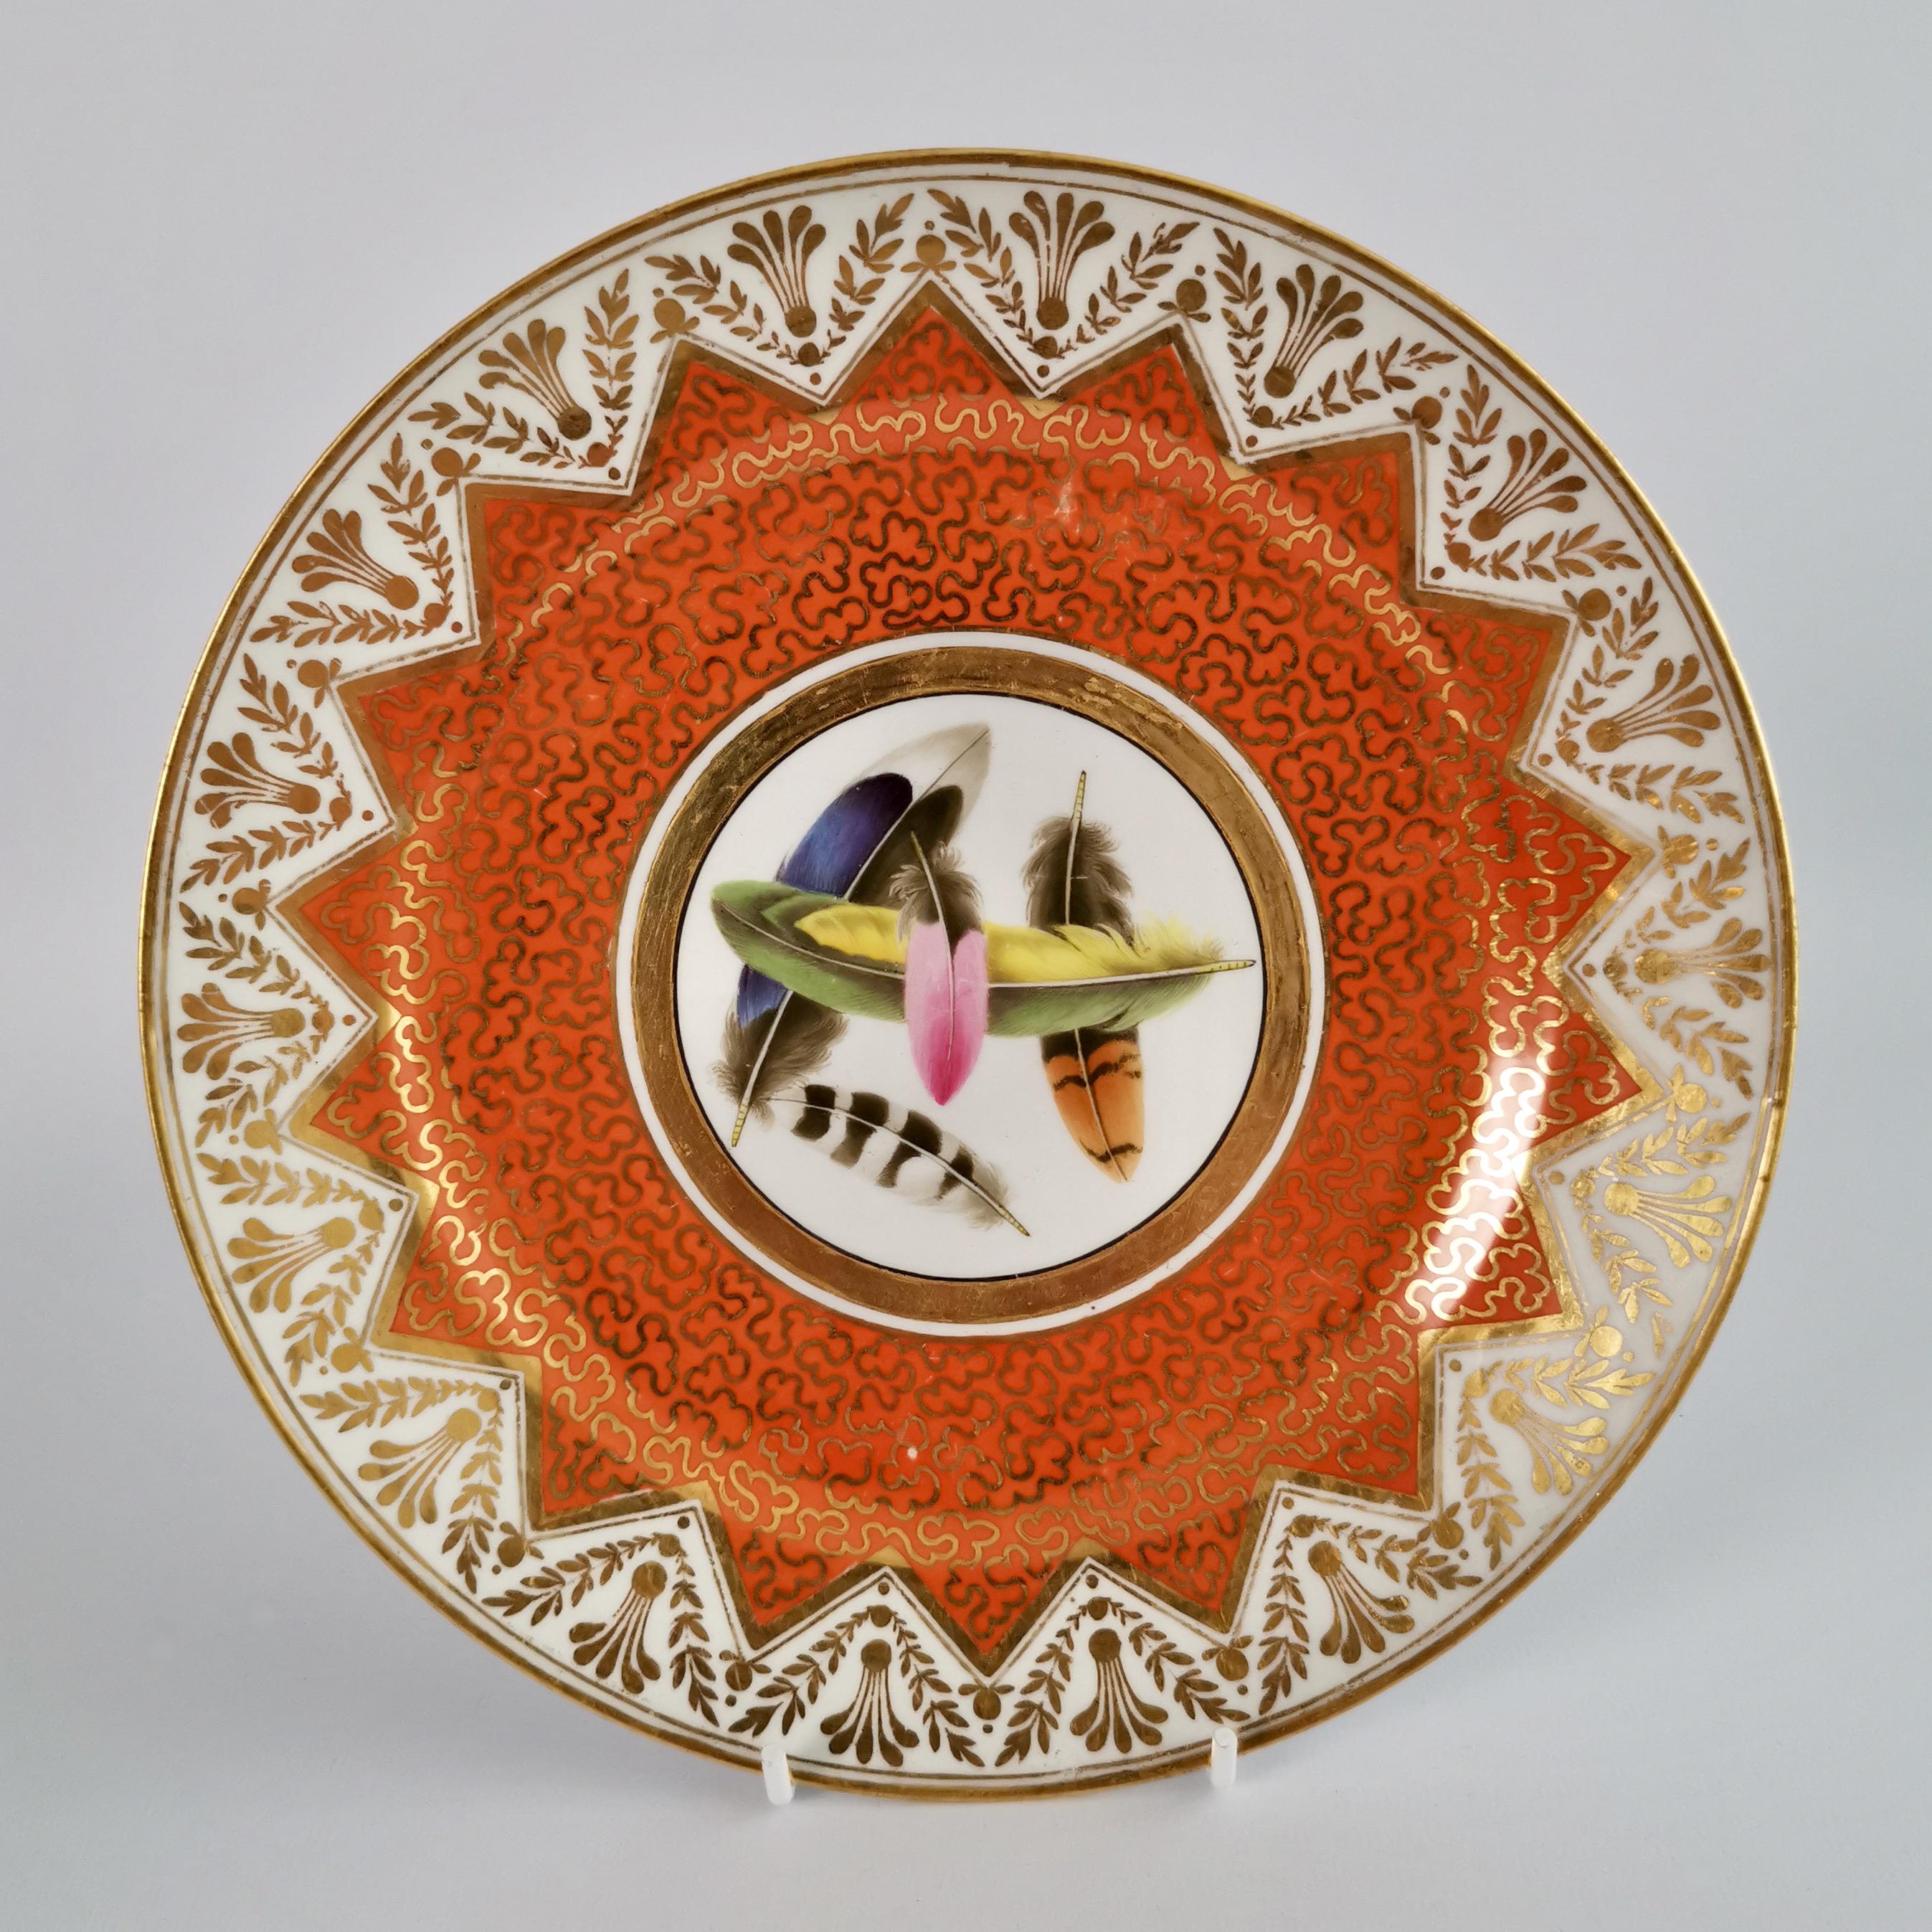 Regency Chamberlains Worcester Set of Plates, Orange, Paintings by H. Chamberlain, 1815